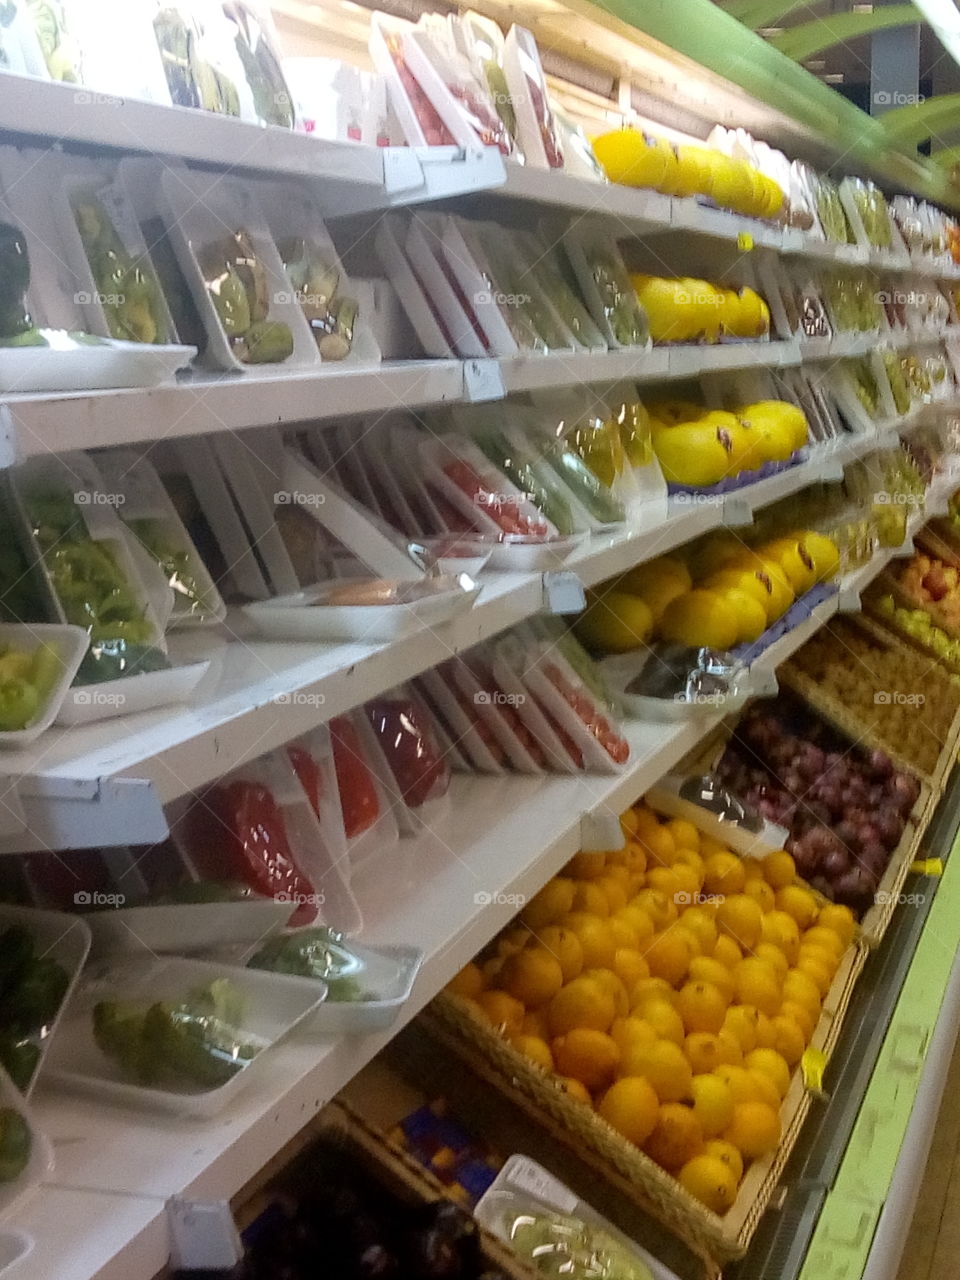 Shelf, Stock, Market, Shopping, Supermarket